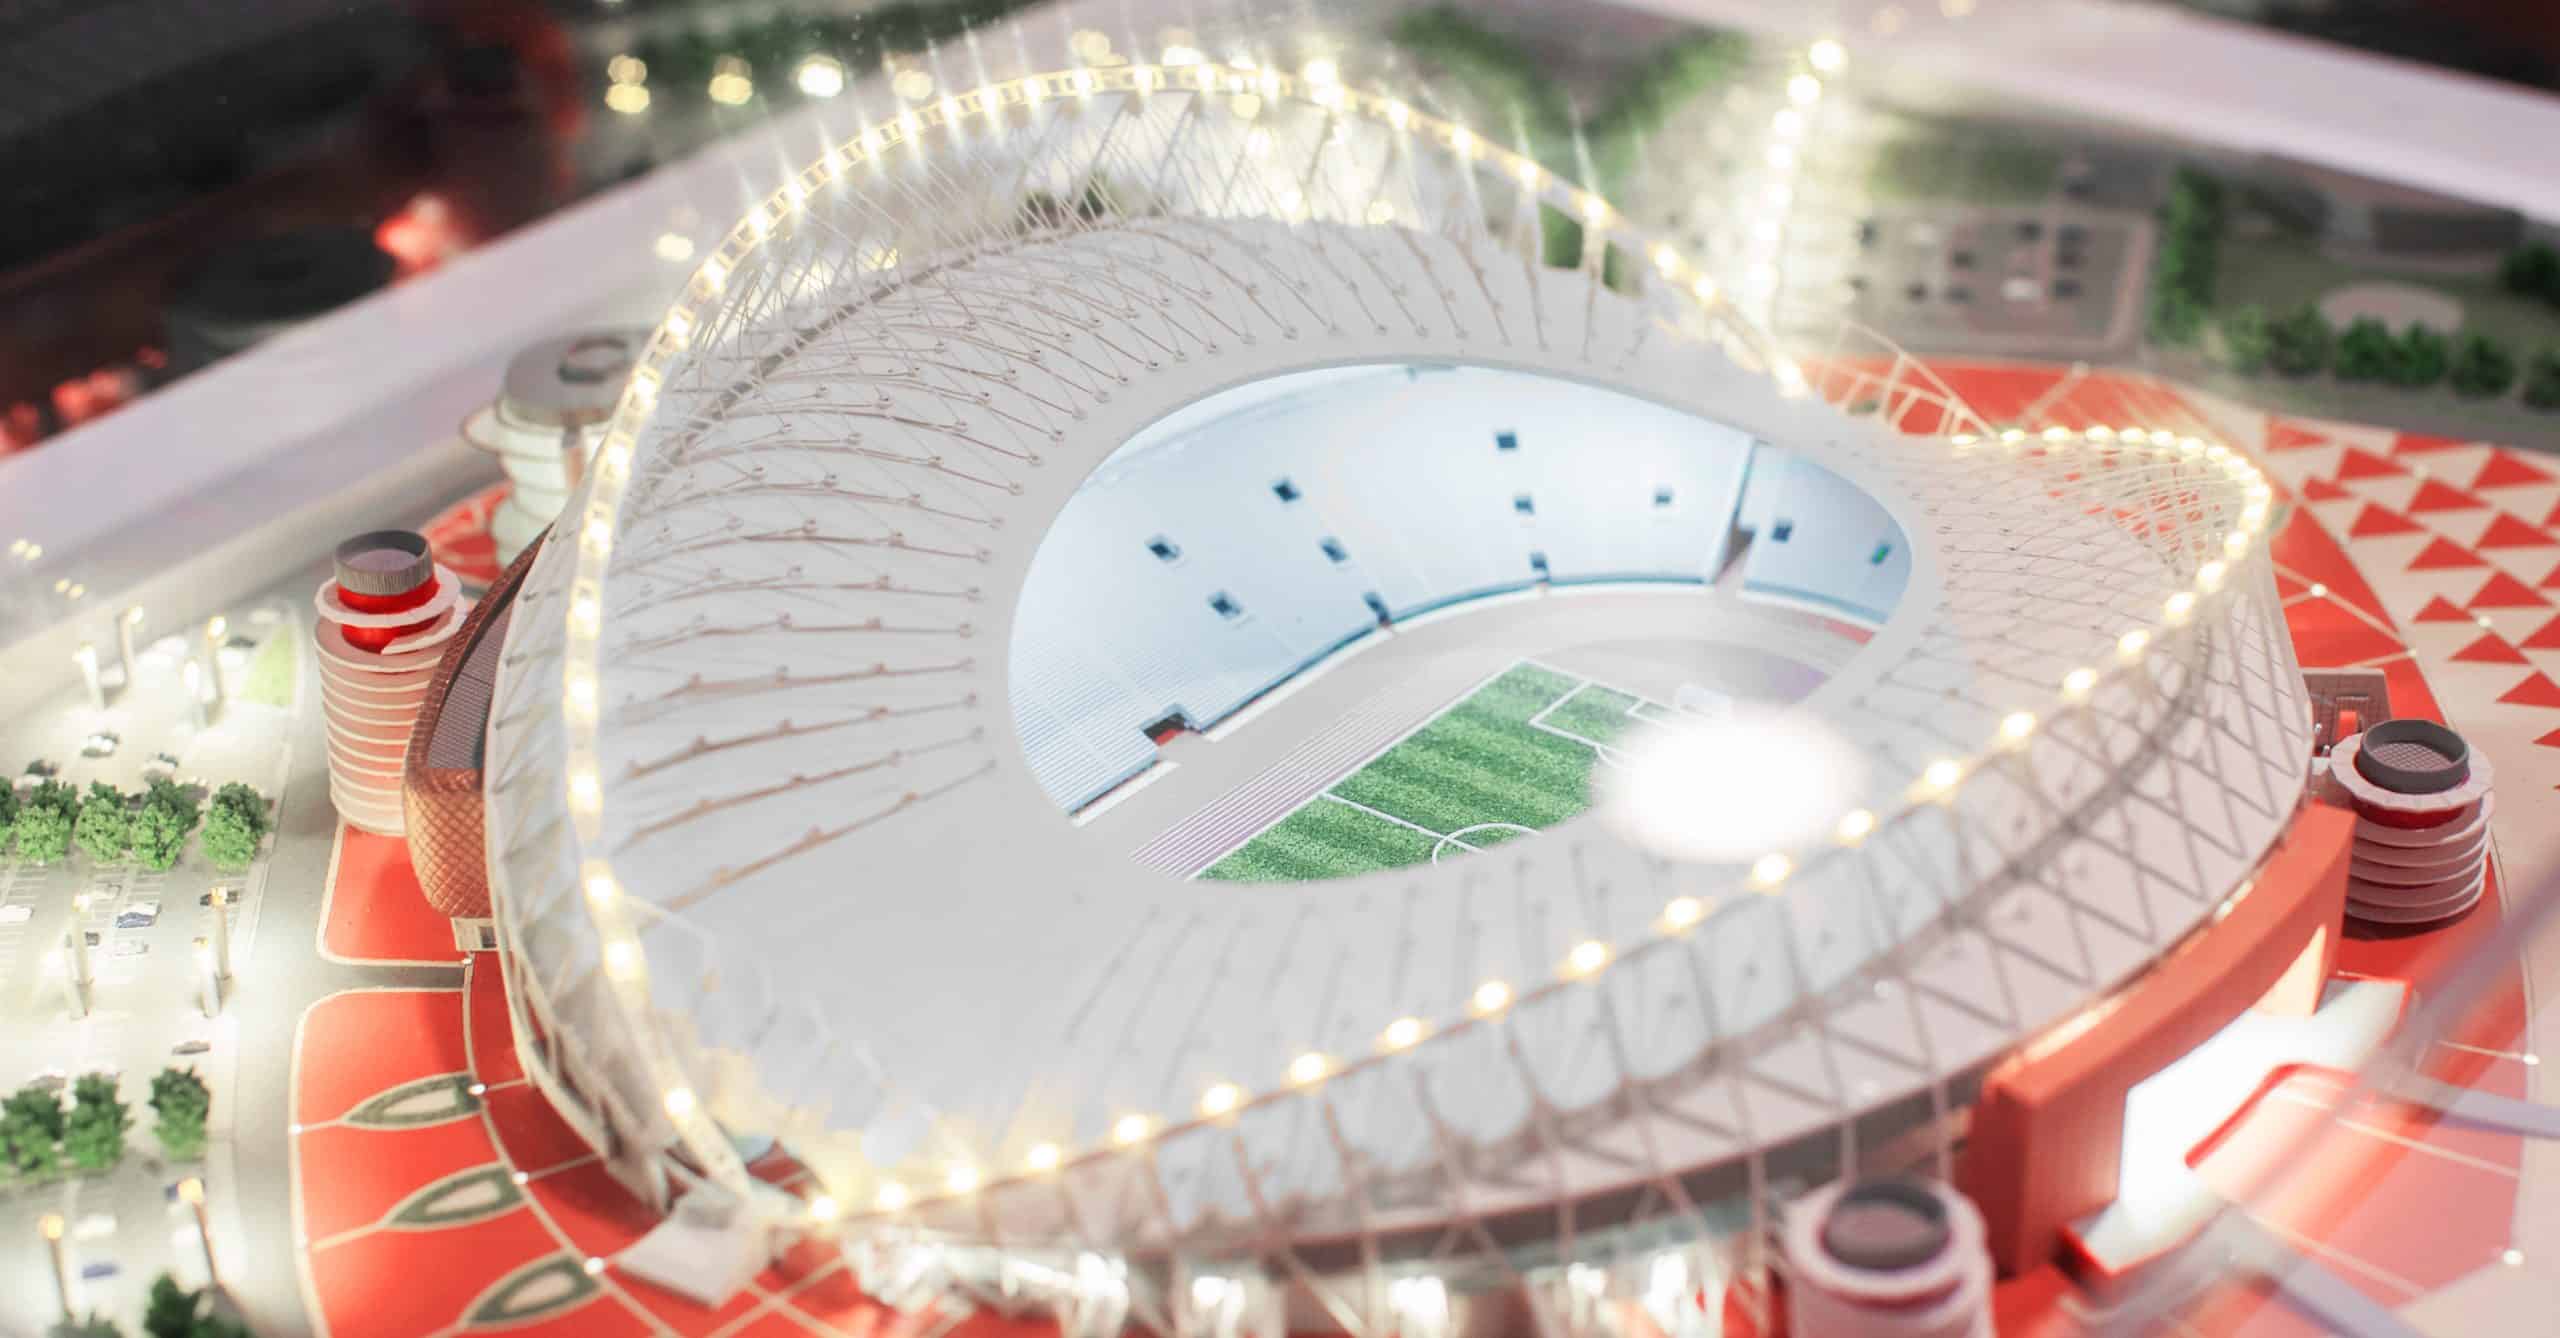 Transformer for Football Stadium Qatar